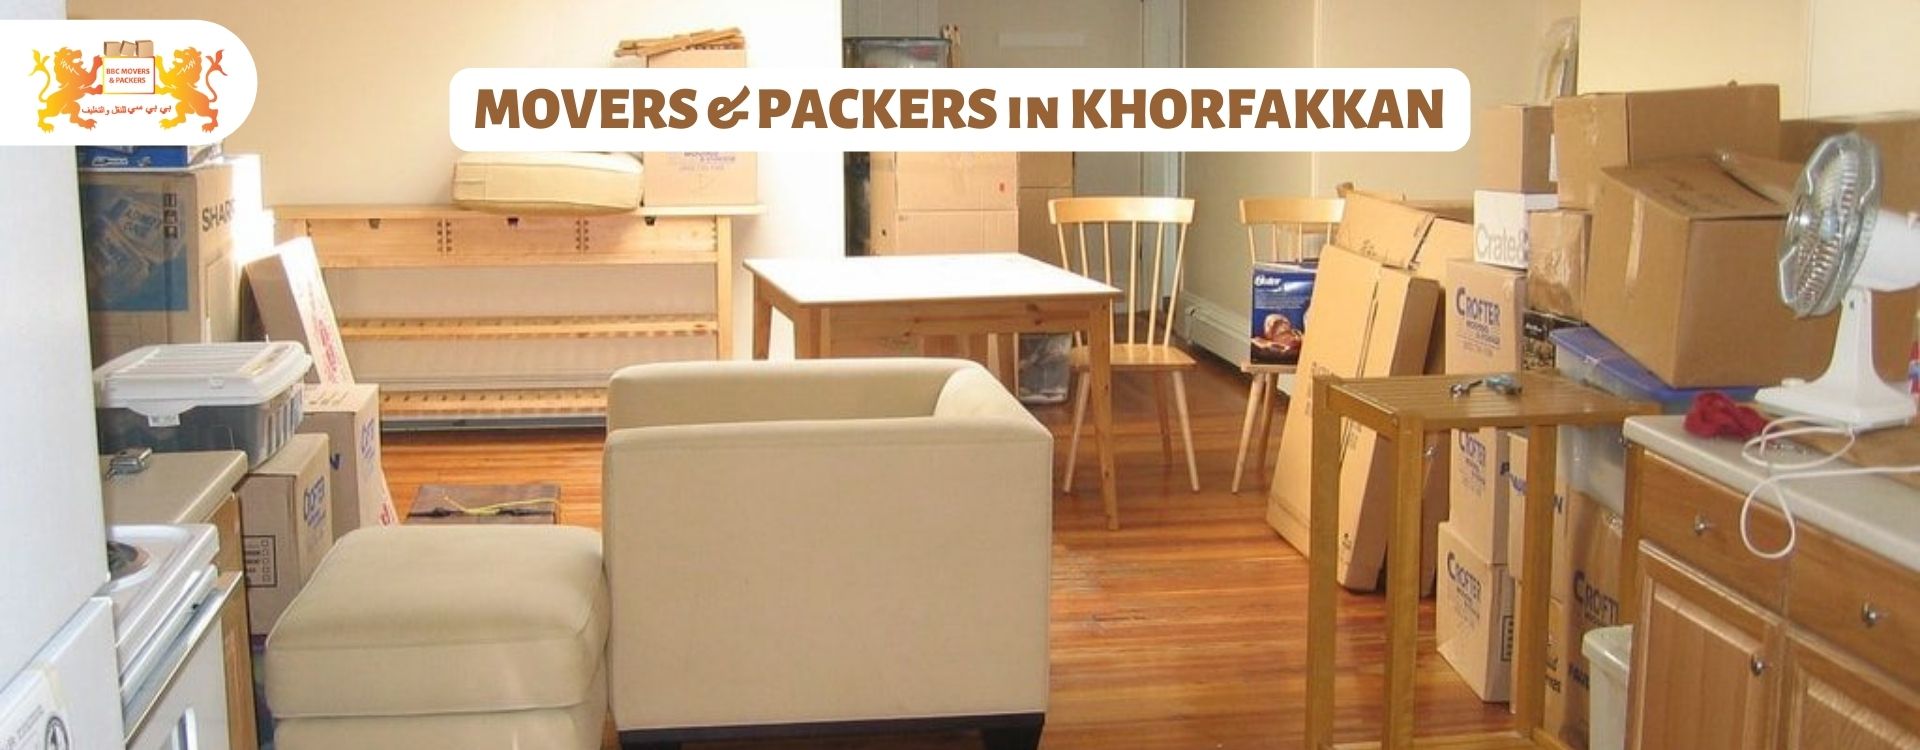 mover and packer in khorfakkan